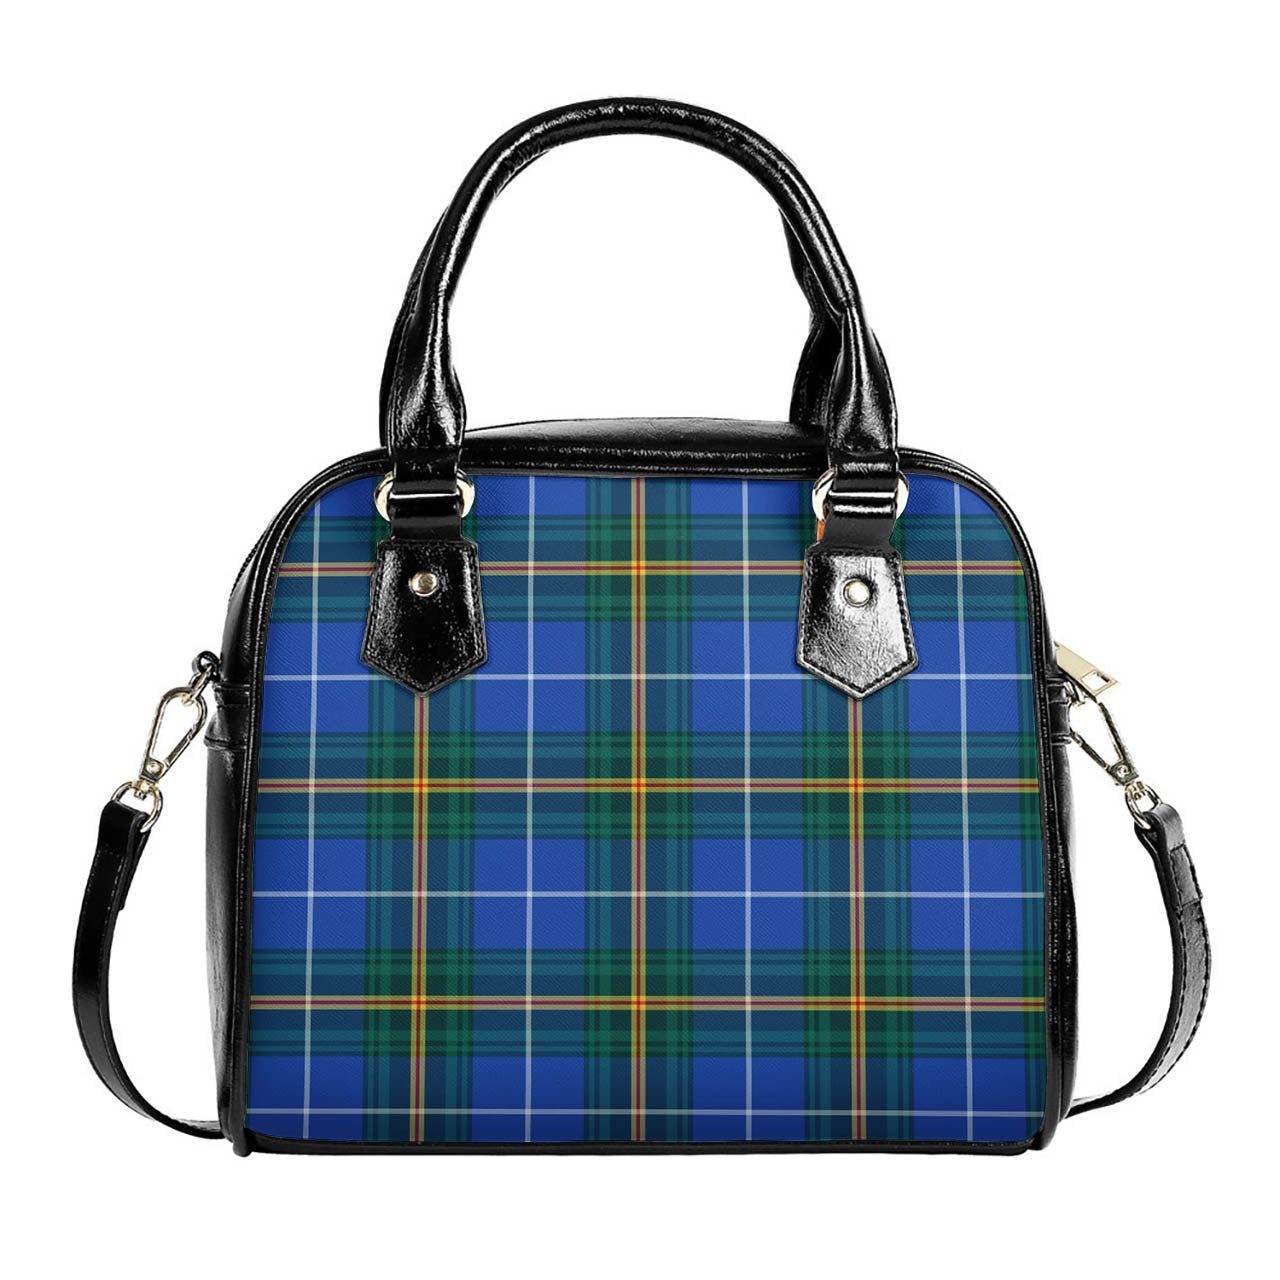 Nova Scotia Province Canada Tartan Shoulder Handbags One Size 6*25*22 cm - Tartanvibesclothing